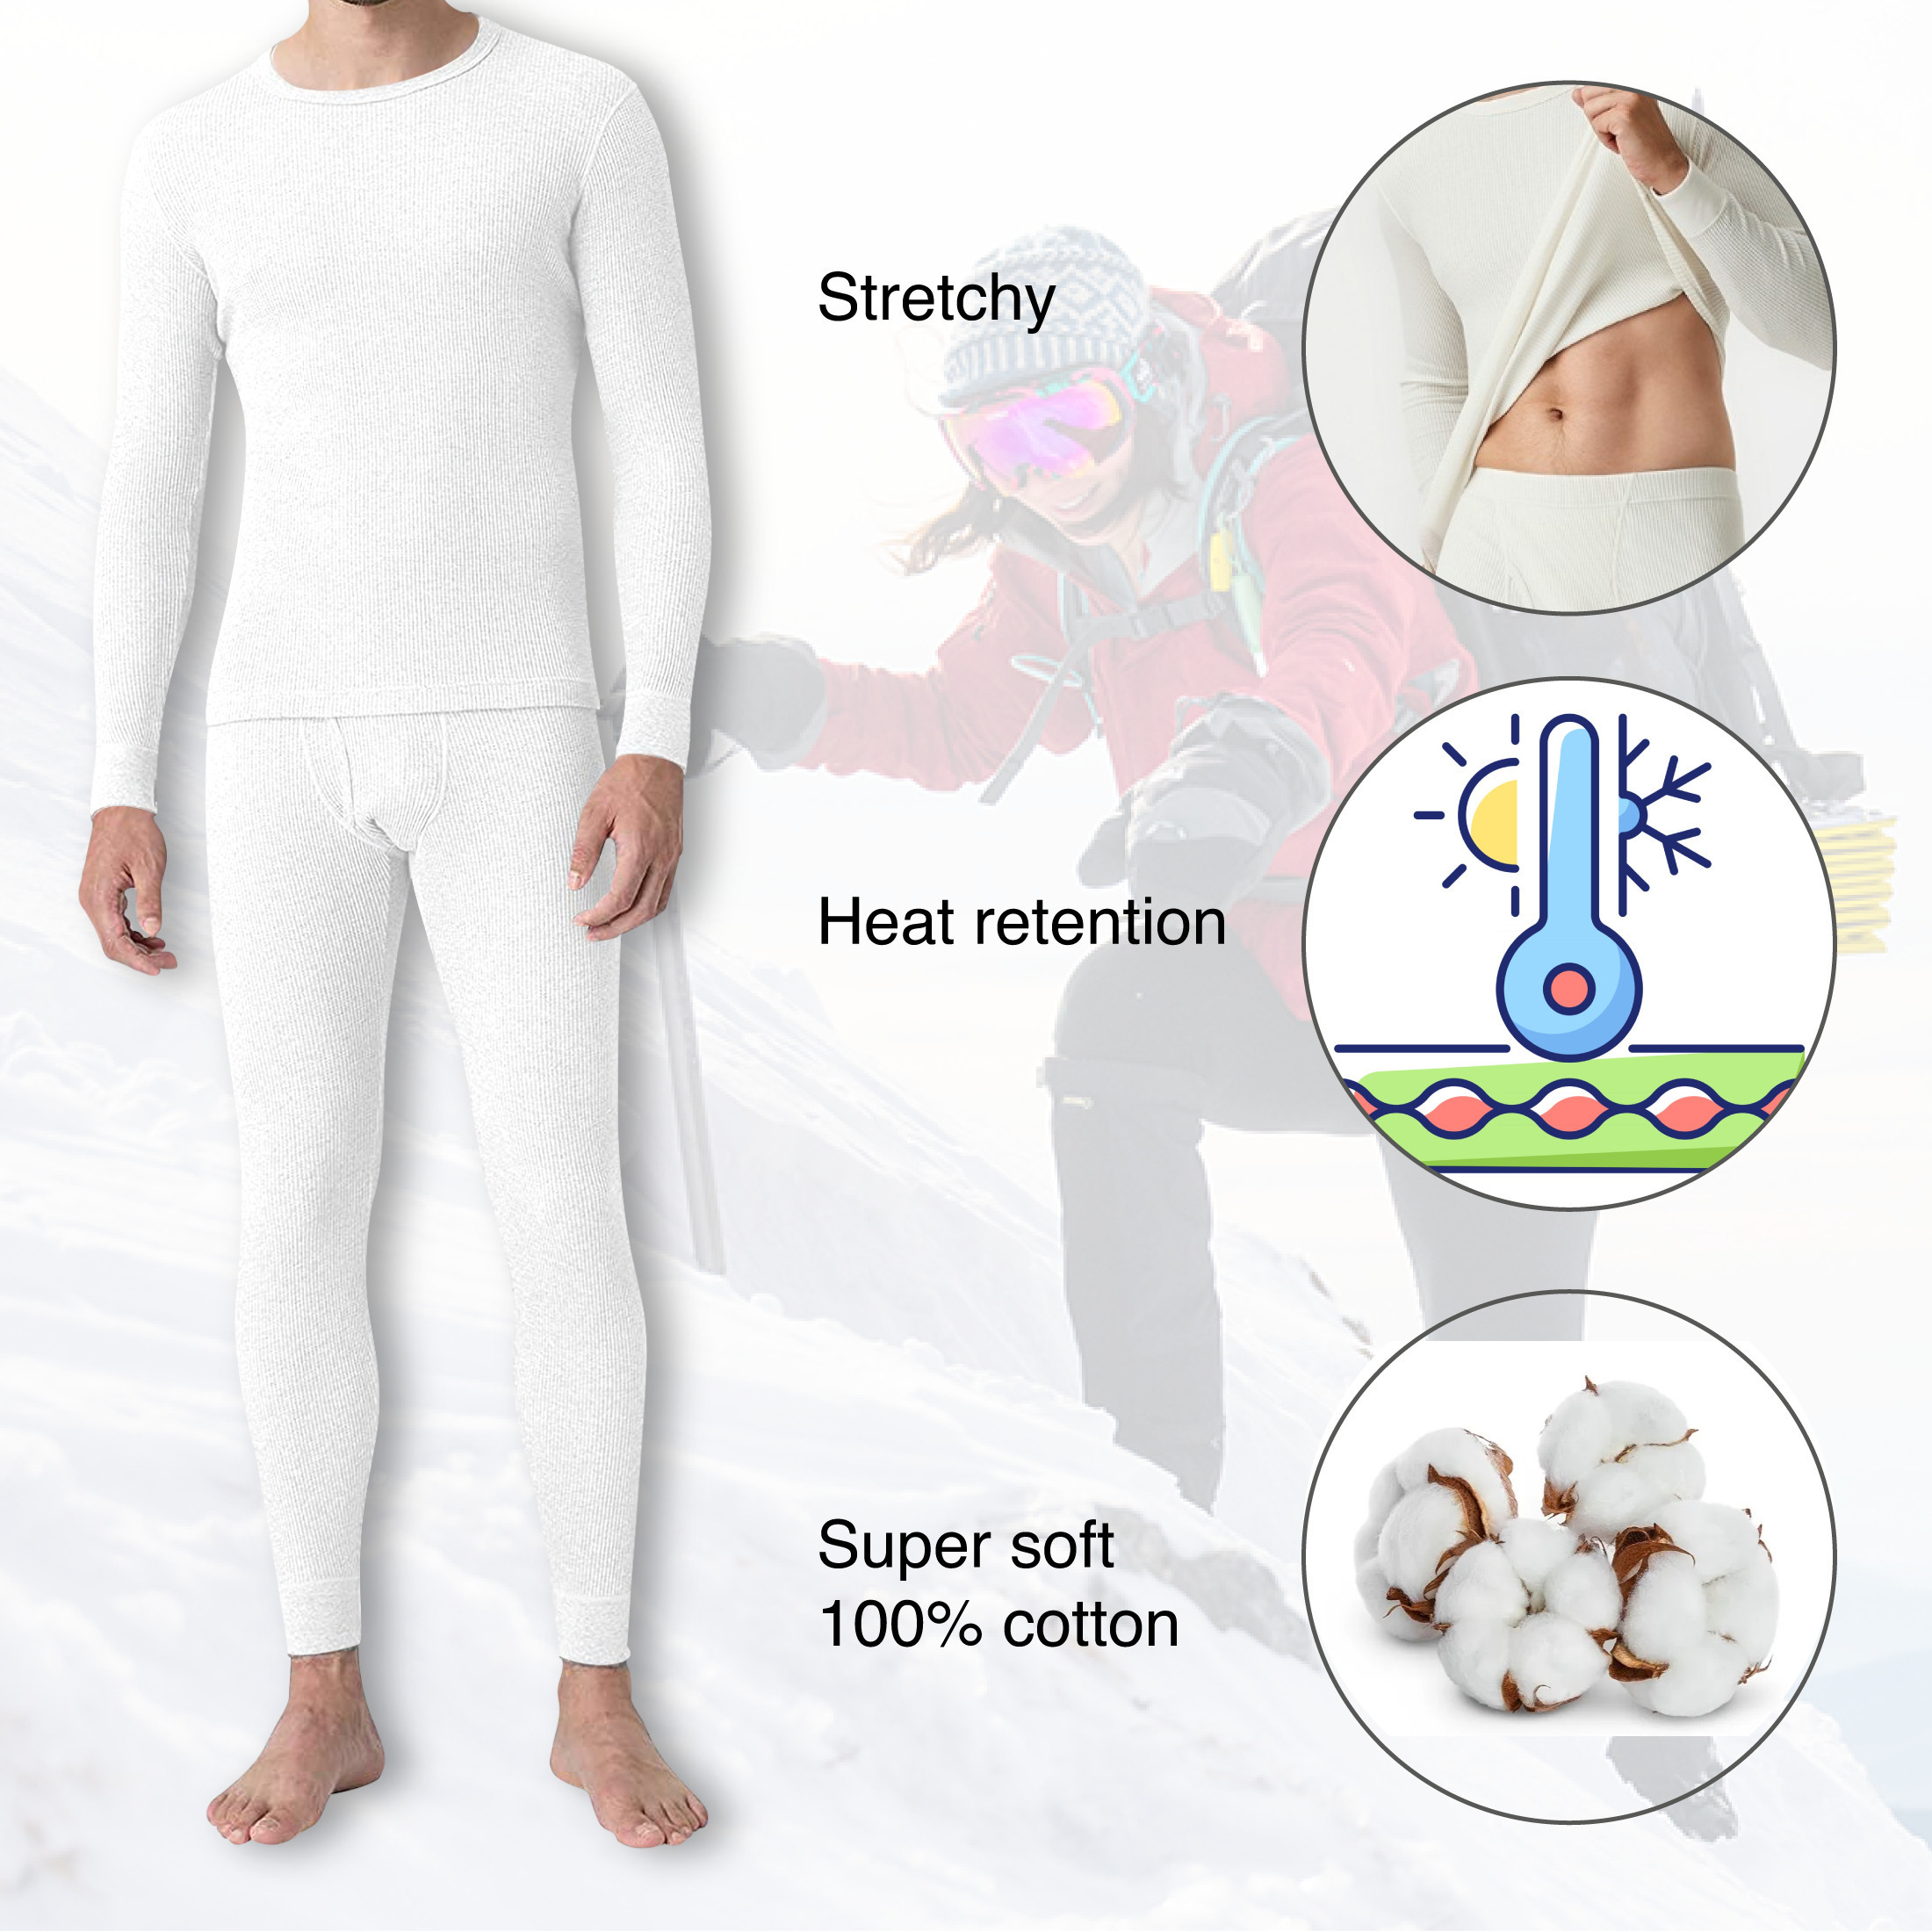 2-Sets: Men's Super Soft Cotton Waffle Knit Winter Thermal Underwear Set - White & Navy, X-Large